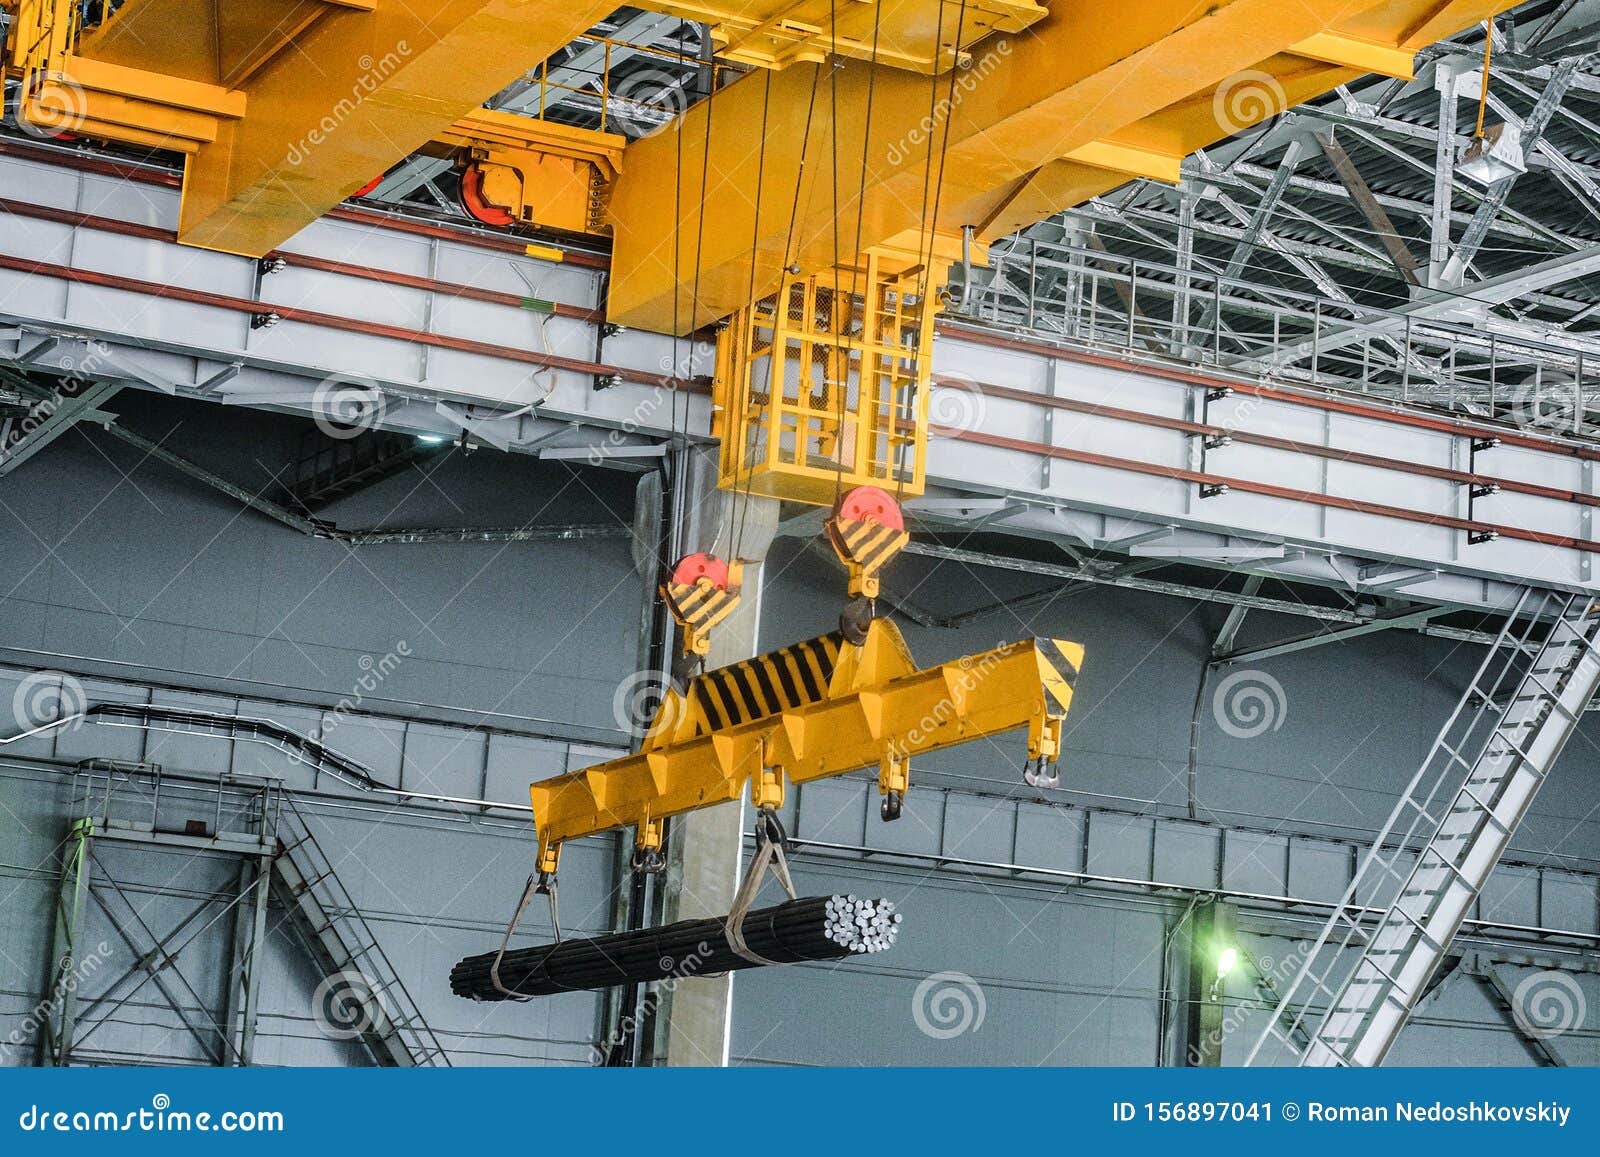 yellow overhead crane carries cargo in engineering plant shop